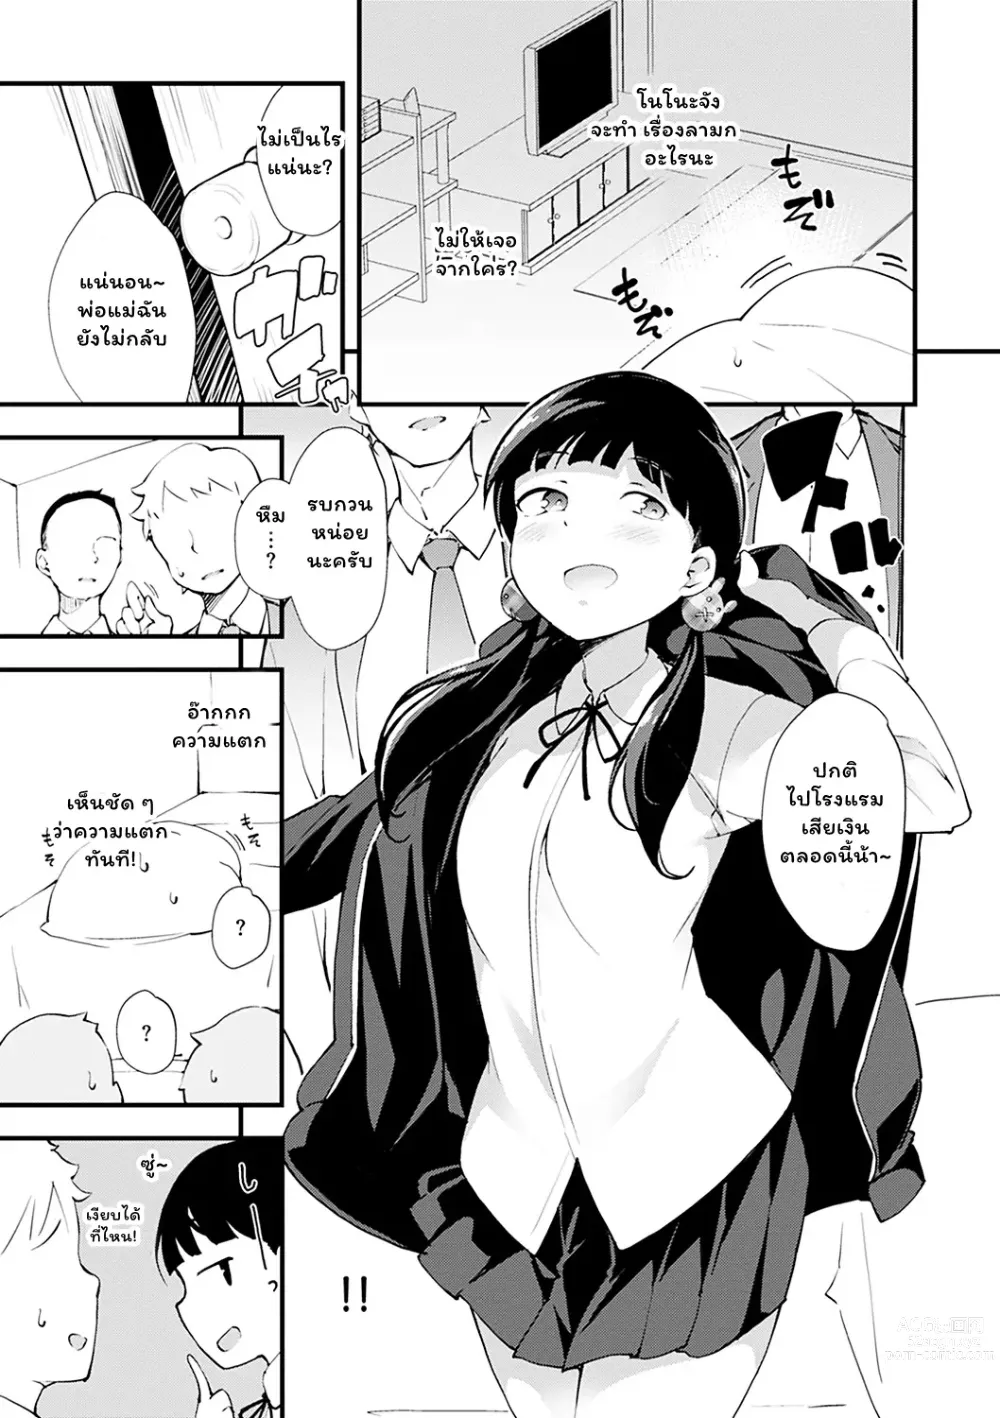 Page 5 of manga ナイショのえっちけんがく